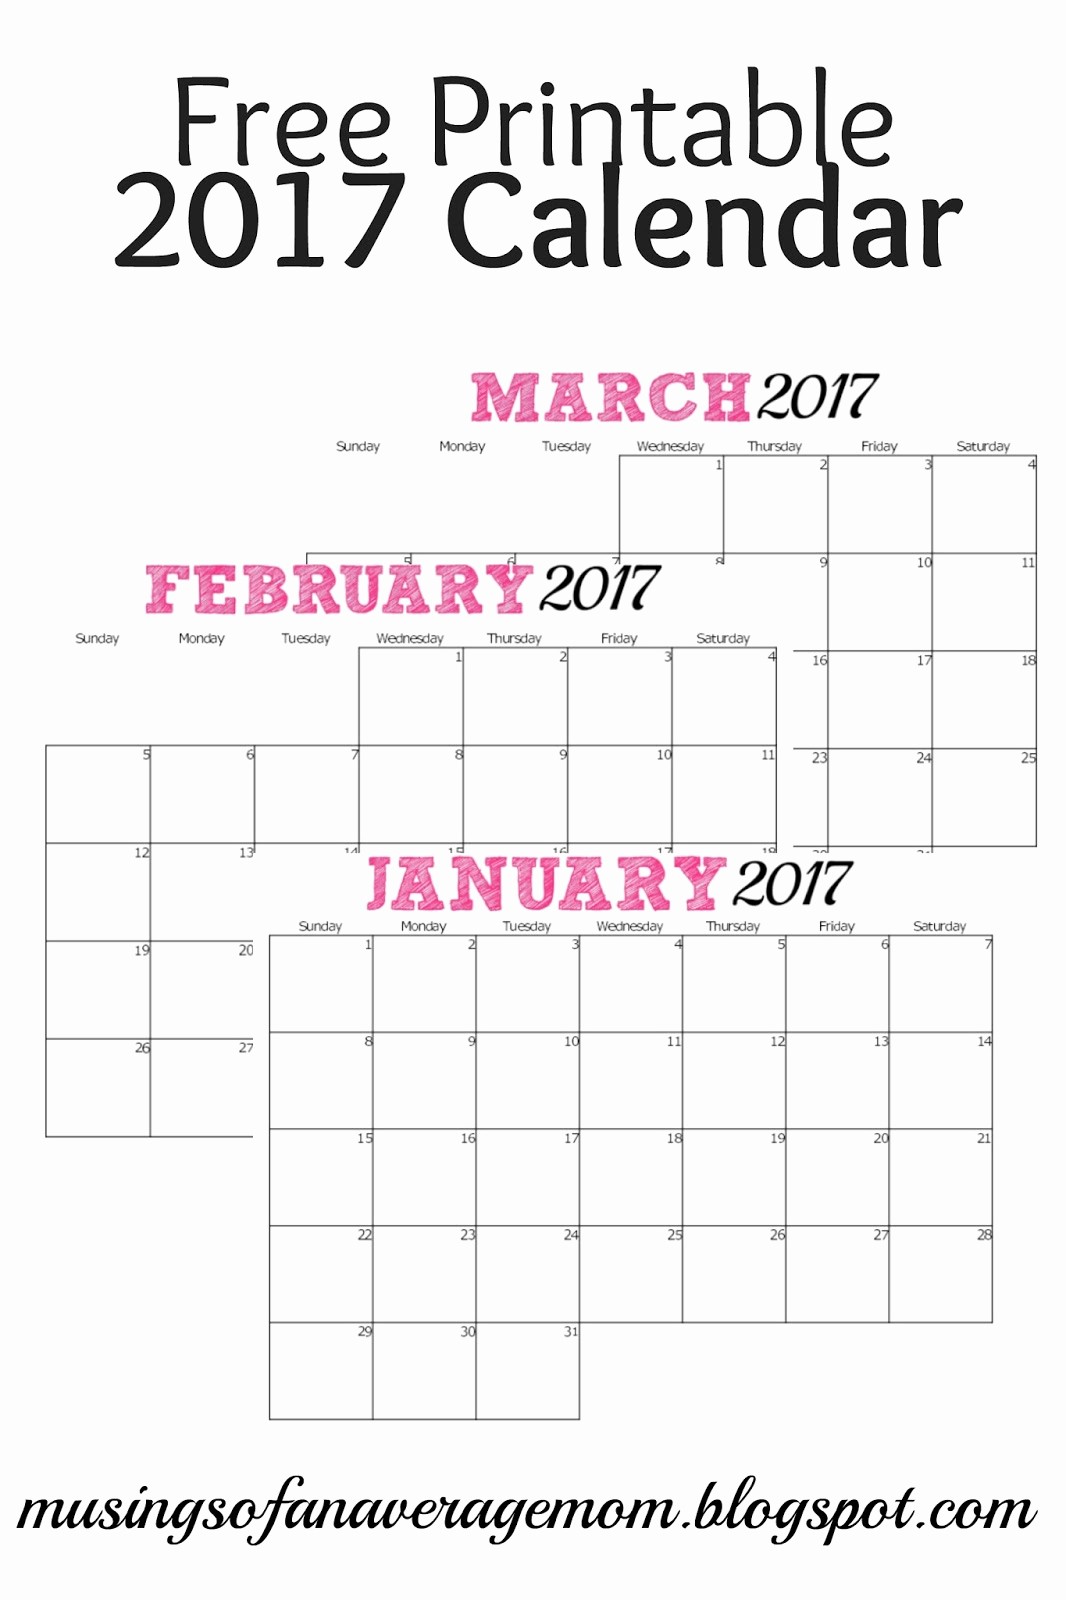 Blank Monthly Calendar 2017 Printable Best Of Musings Of An Average Mom 2017 Monthly Calendars